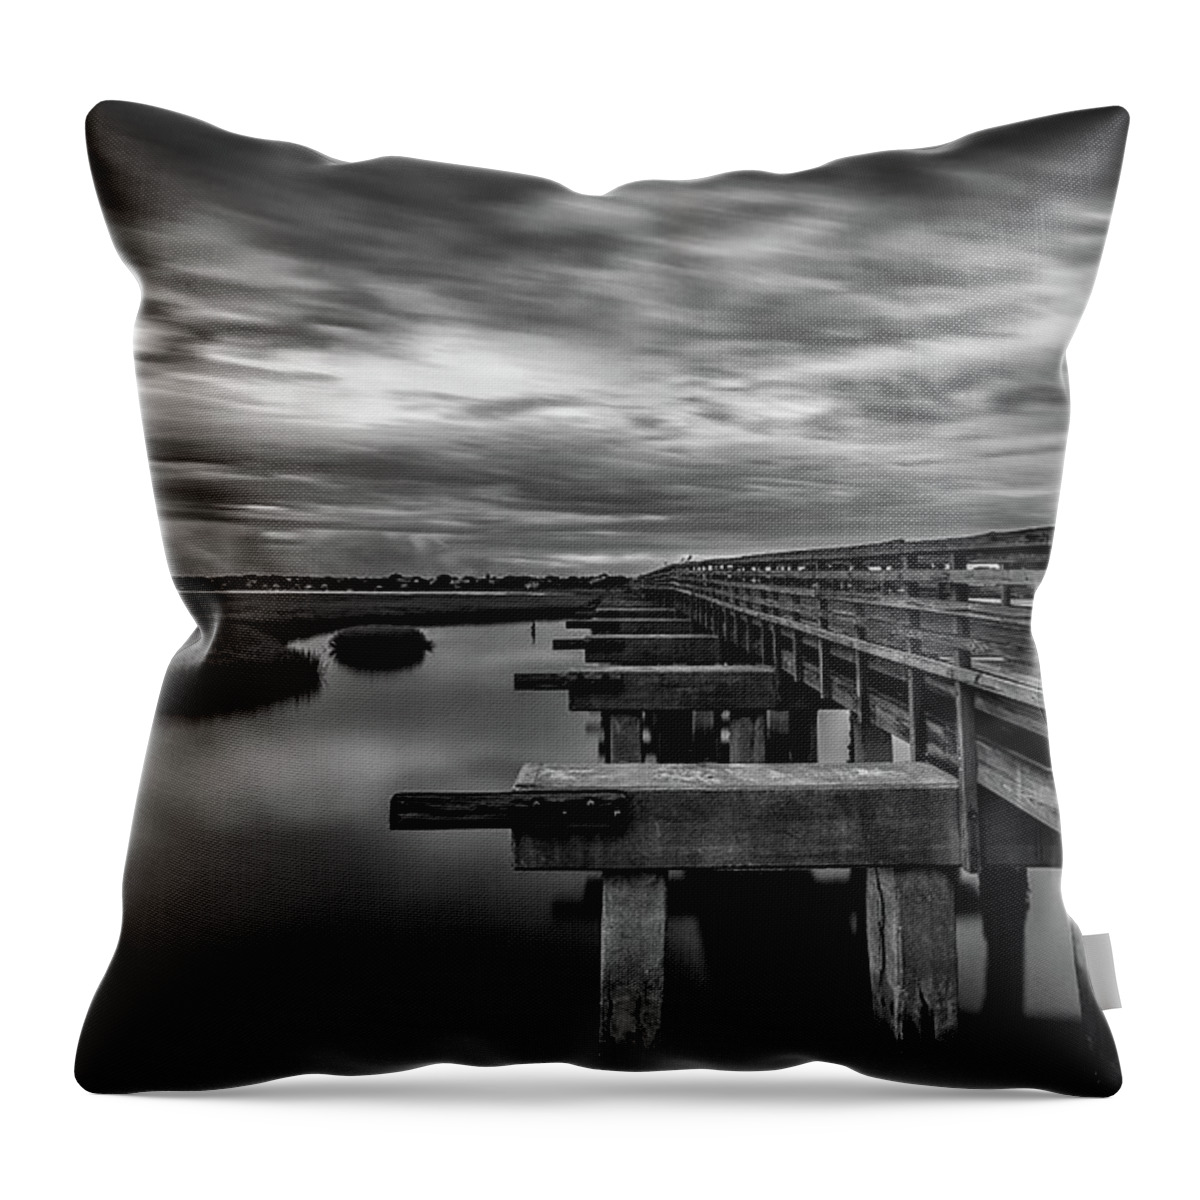 Pitt Street Bridge Throw Pillow featuring the photograph Pitt Street Bridge Black and White by Donnie Whitaker